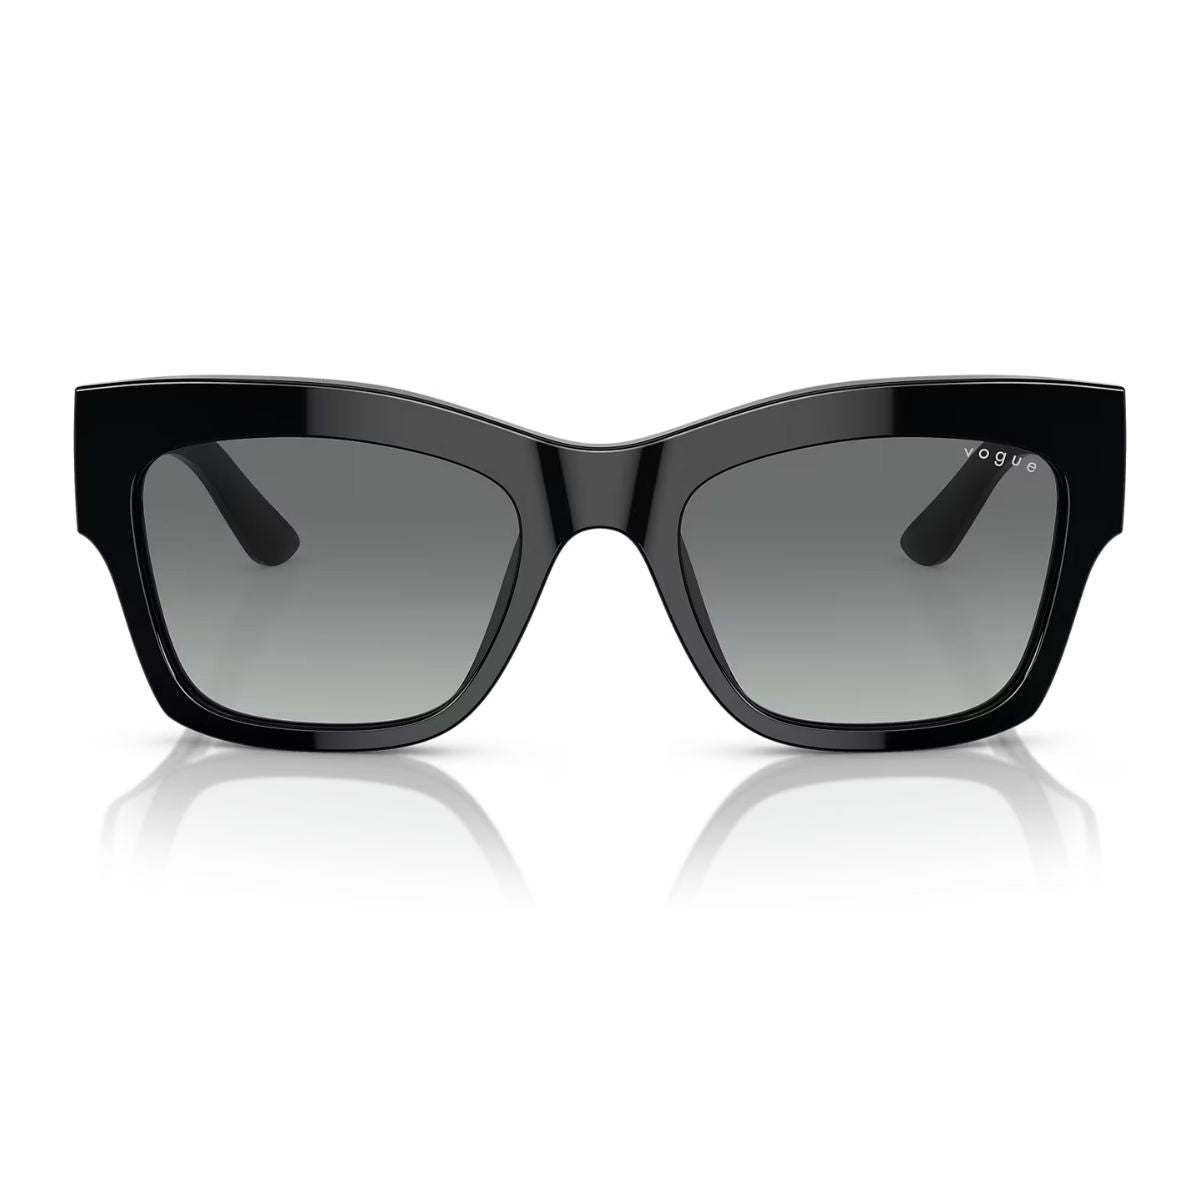 "Shop Stylish Women Cat Eye Sunglasses From Vogue At Online Optorium"